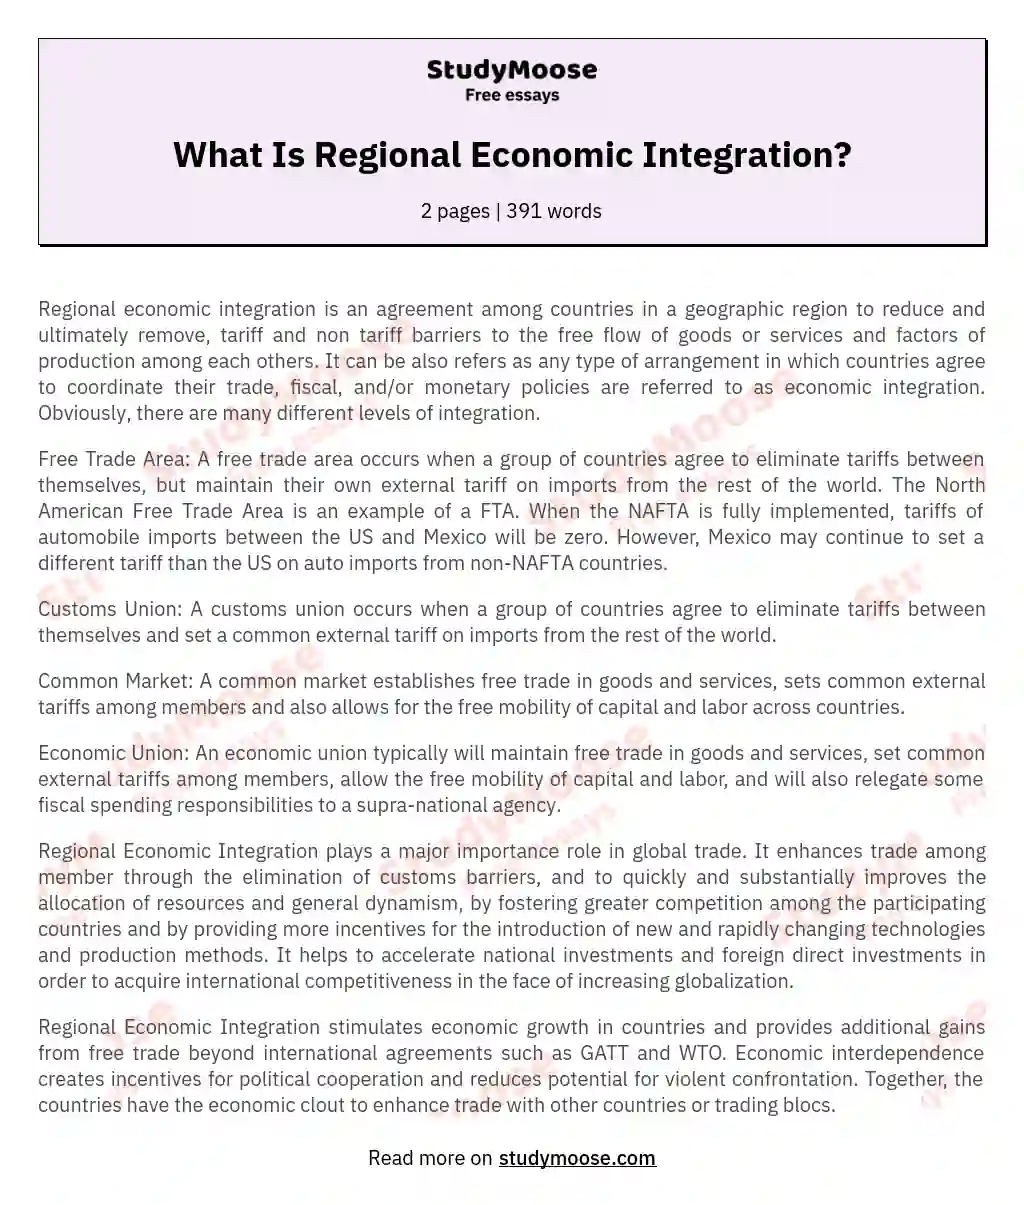 What Is Regional Economic Integration? essay